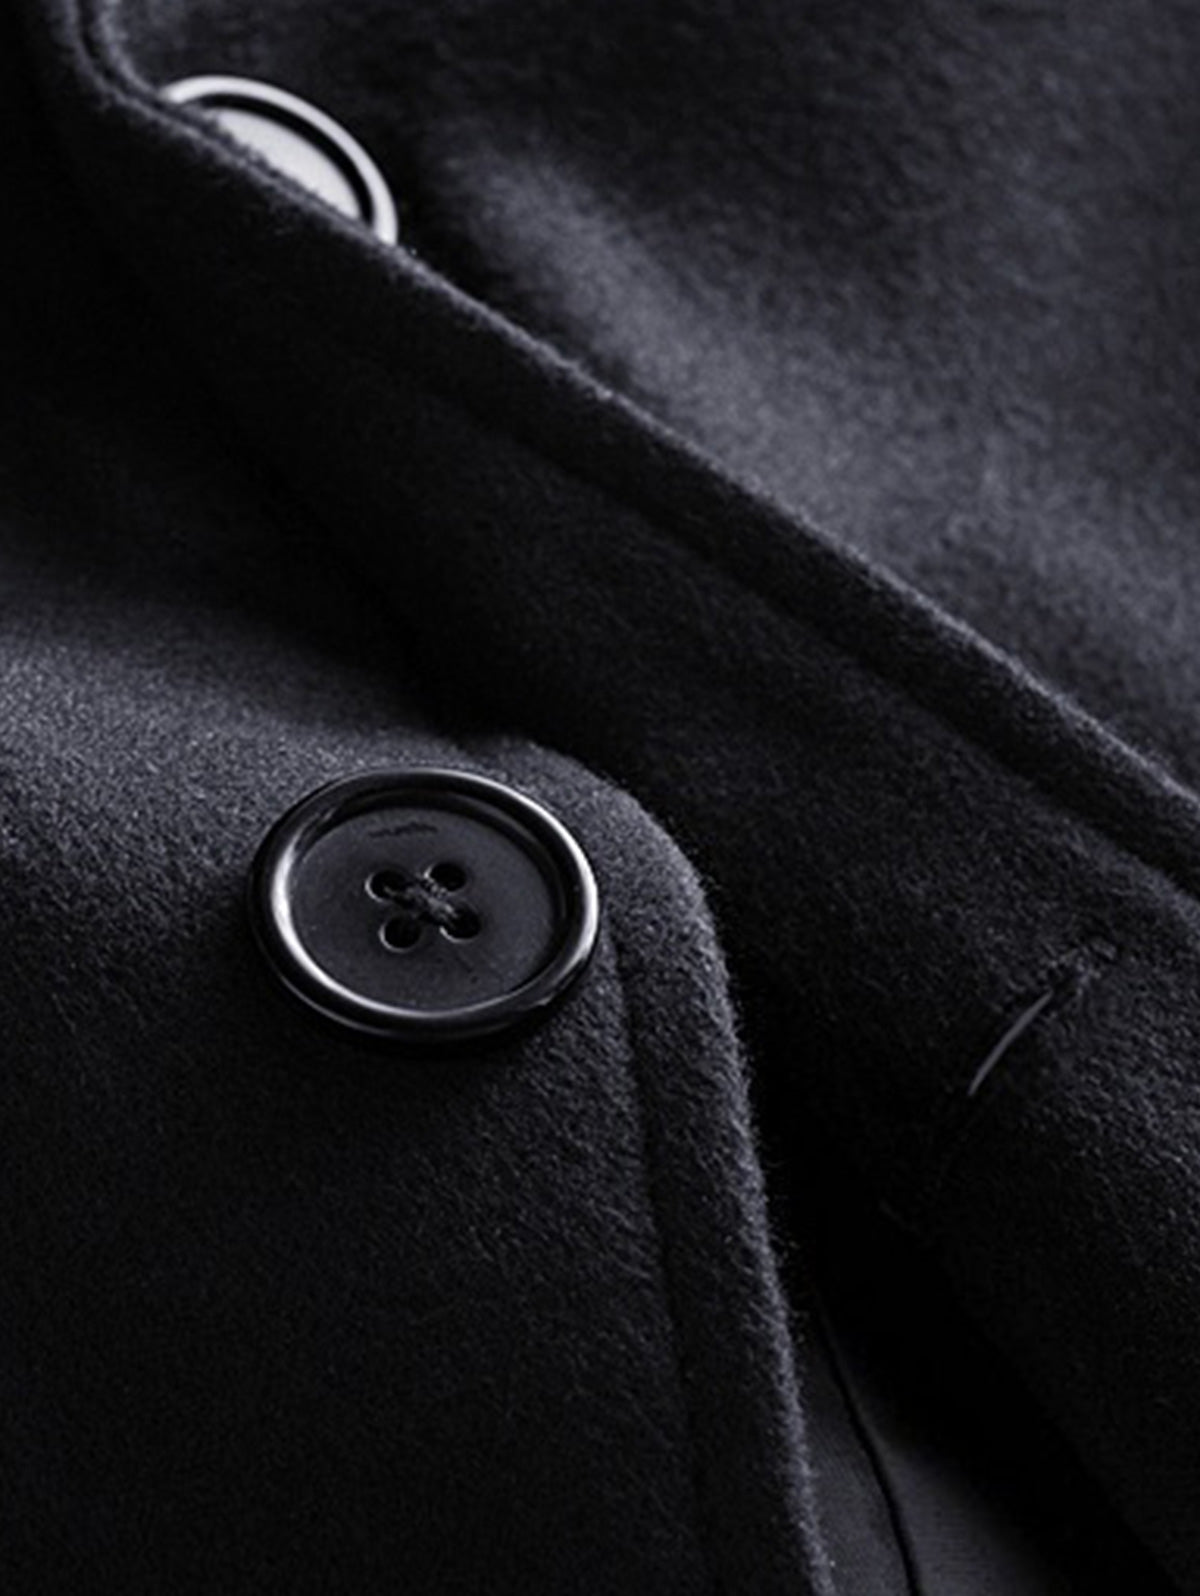 Men's Solid Color Single Breasted Wool Blend Longline Coat